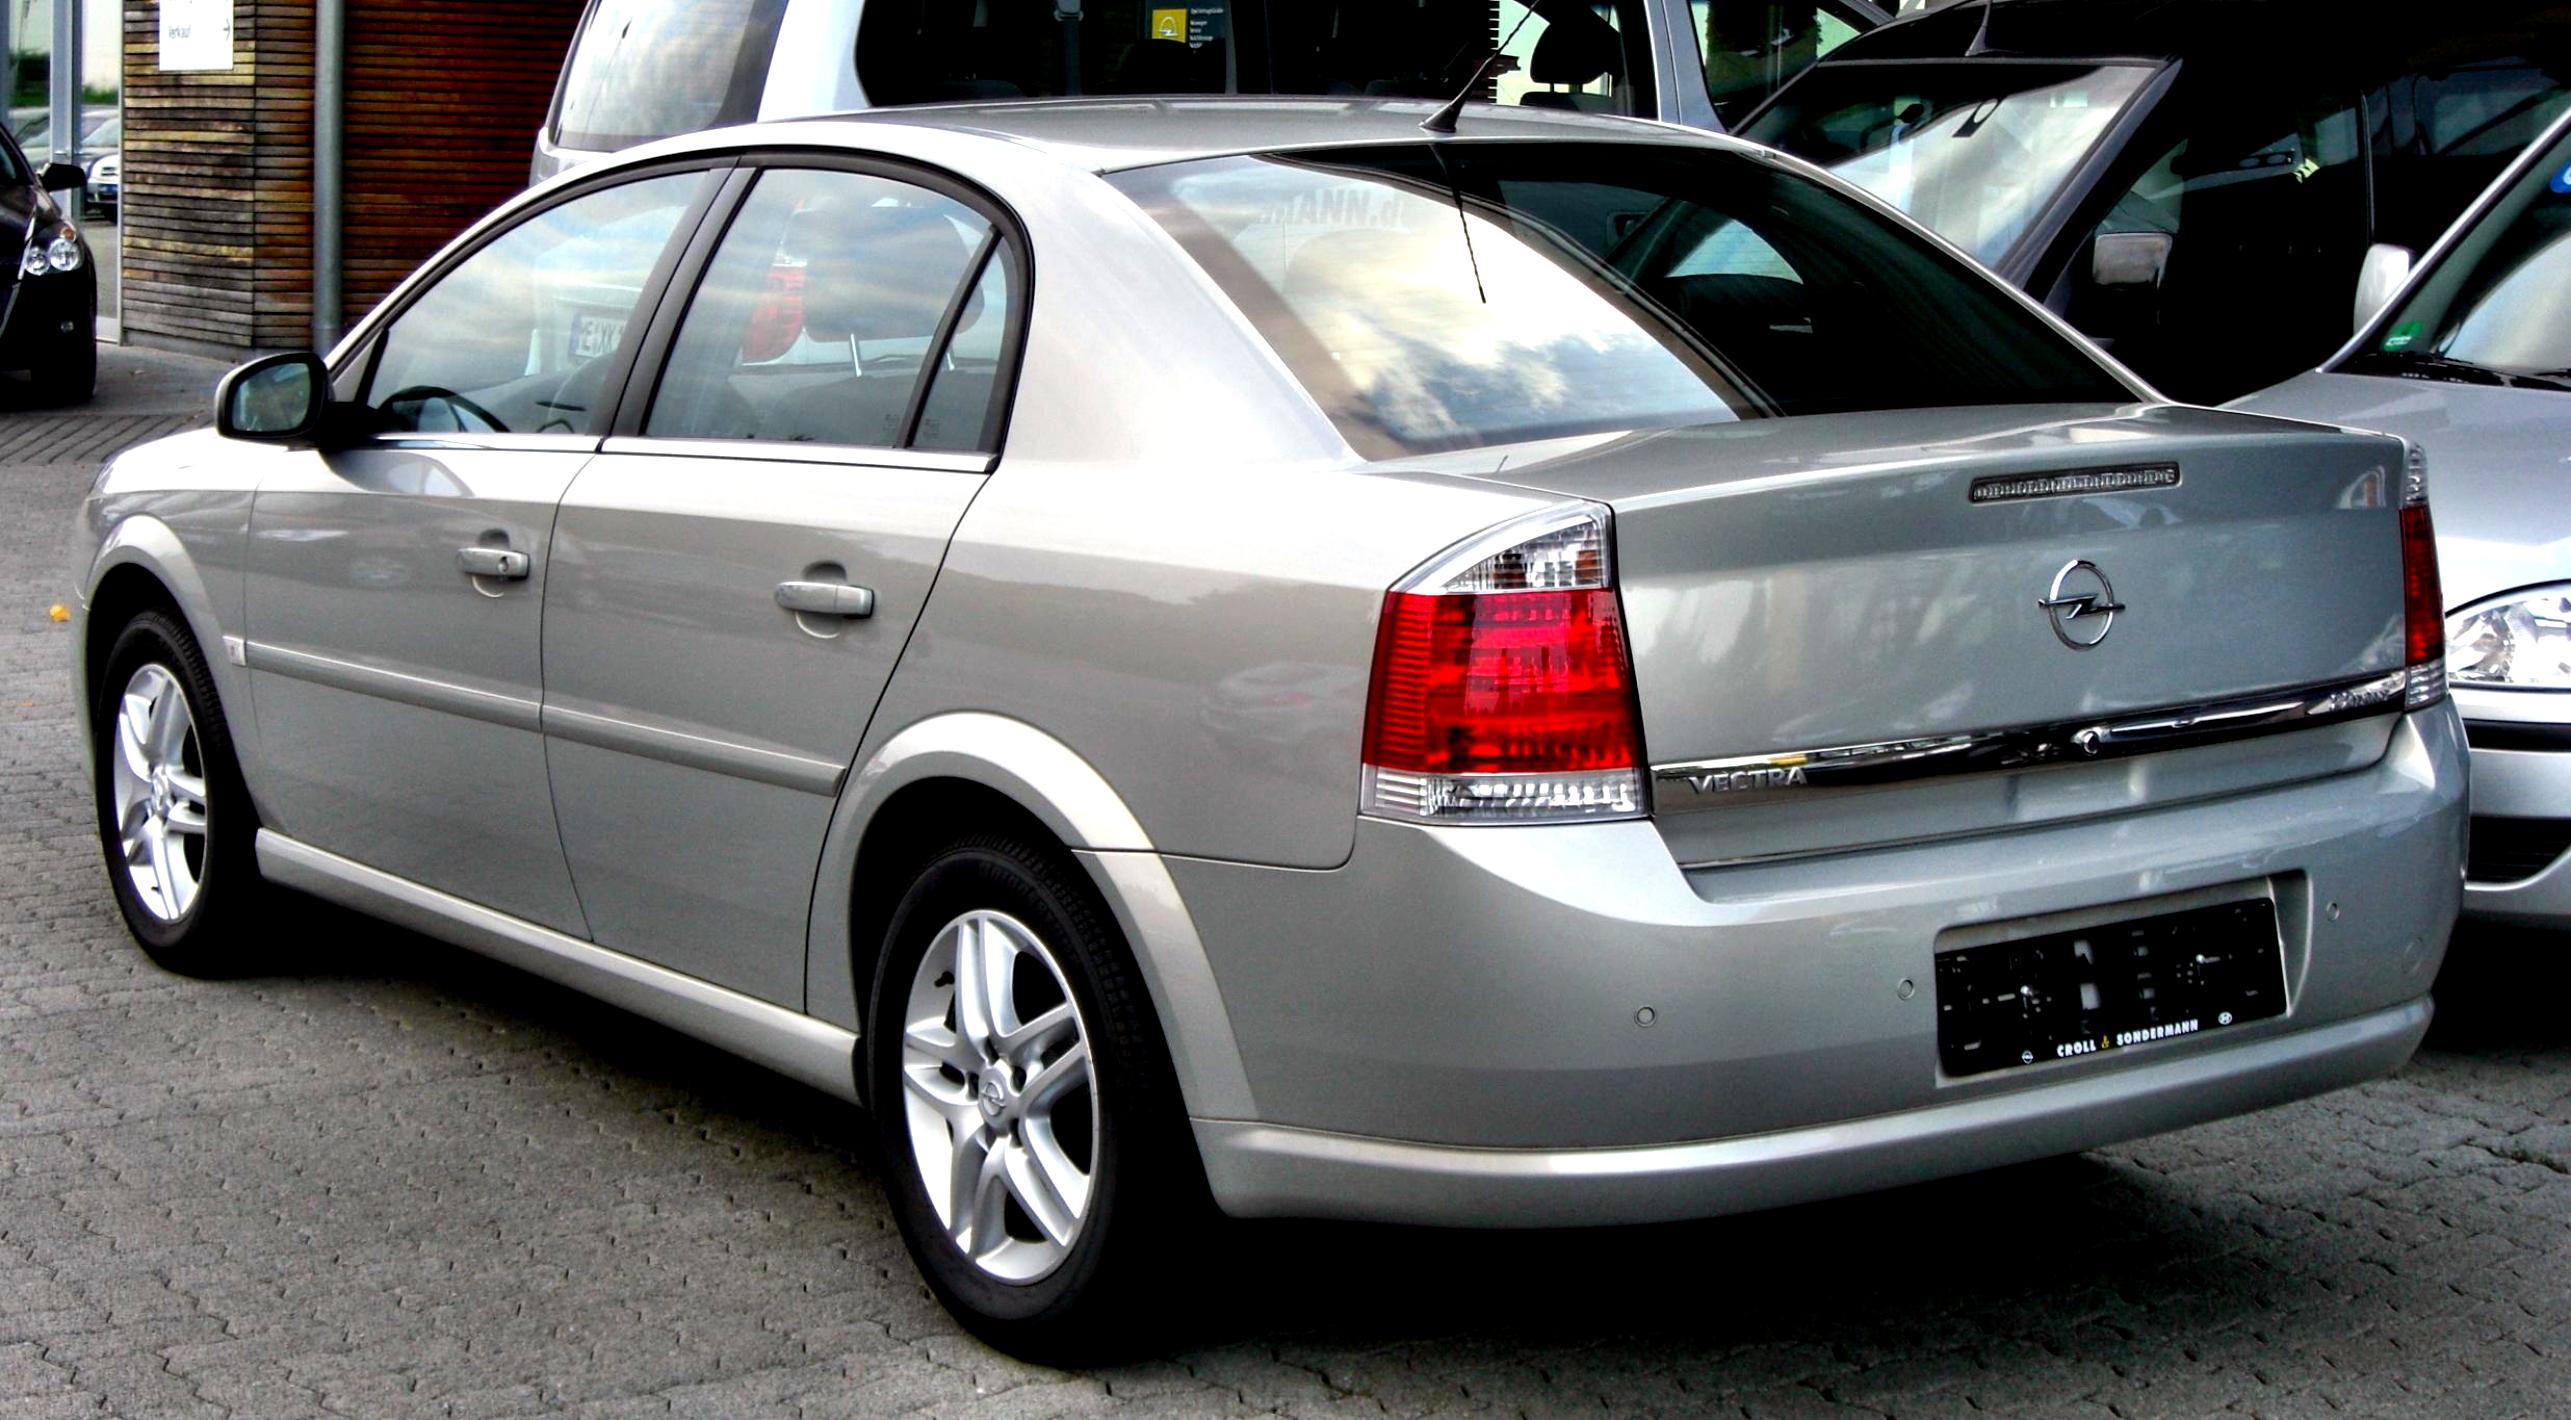 Vectras vm. Opel Vectra c 2002. Opel Vectra c 2.2. Opel Vectra седан 2008. Опель Вектра с 2002 2.2.